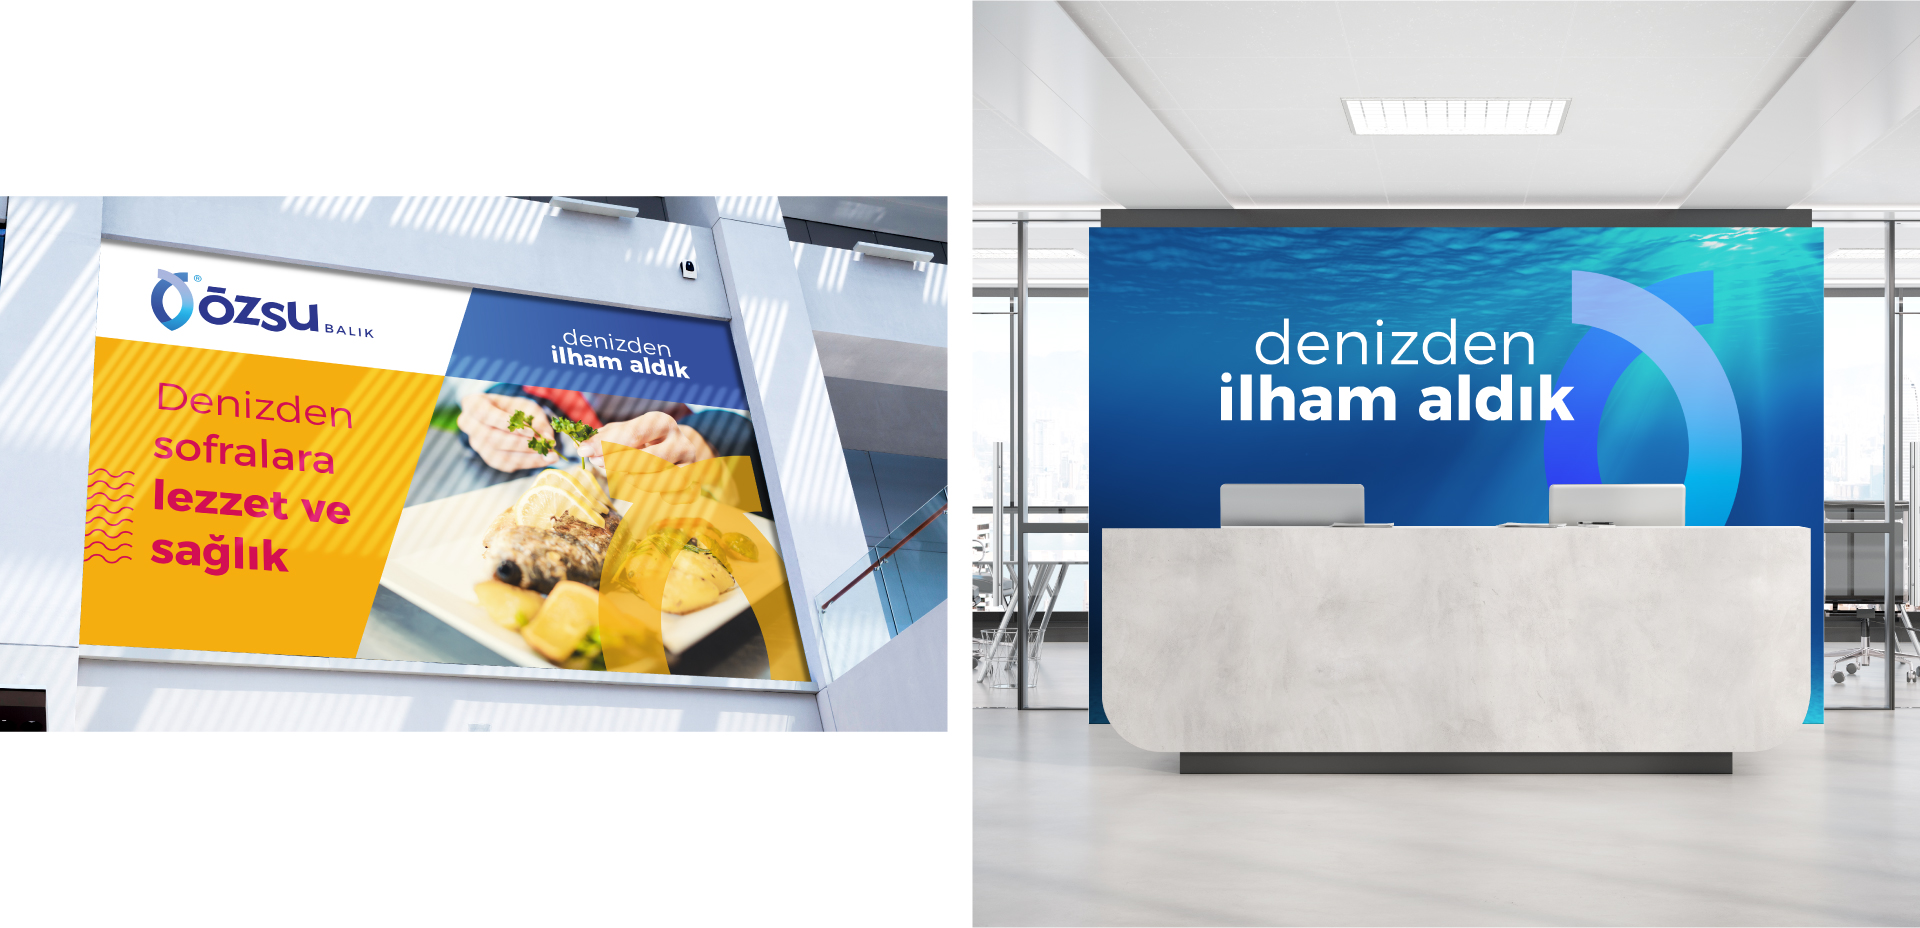 Özsu Fish - KONSEPTIZ Advertising Agency in Turkey